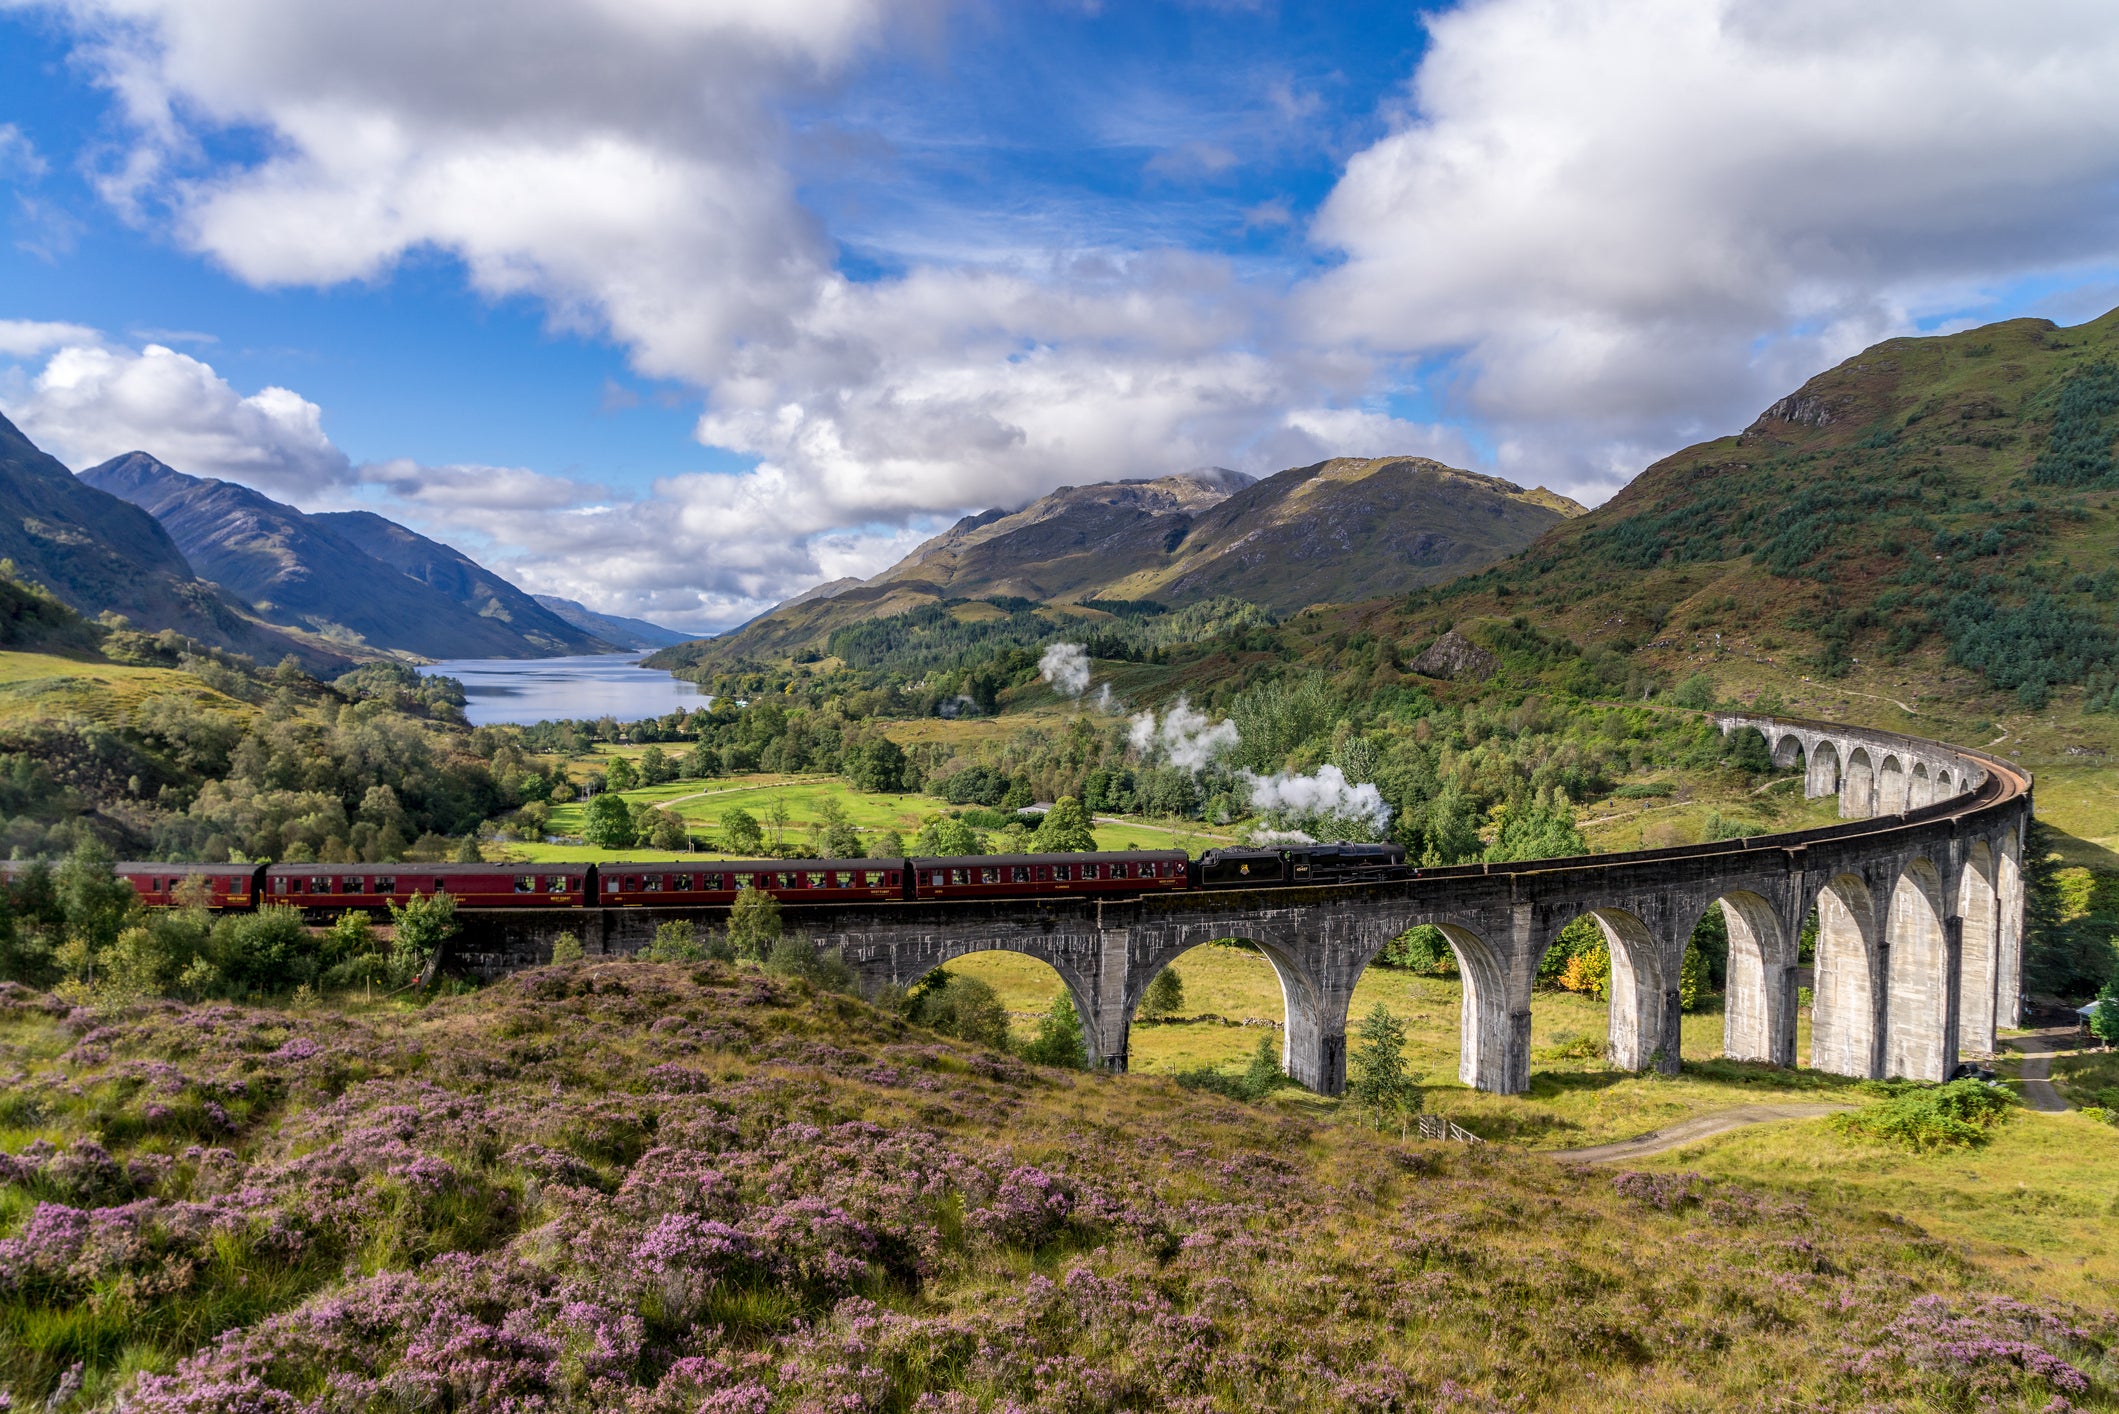 Best in class: Glenfinnan railway viaduct in Scotland